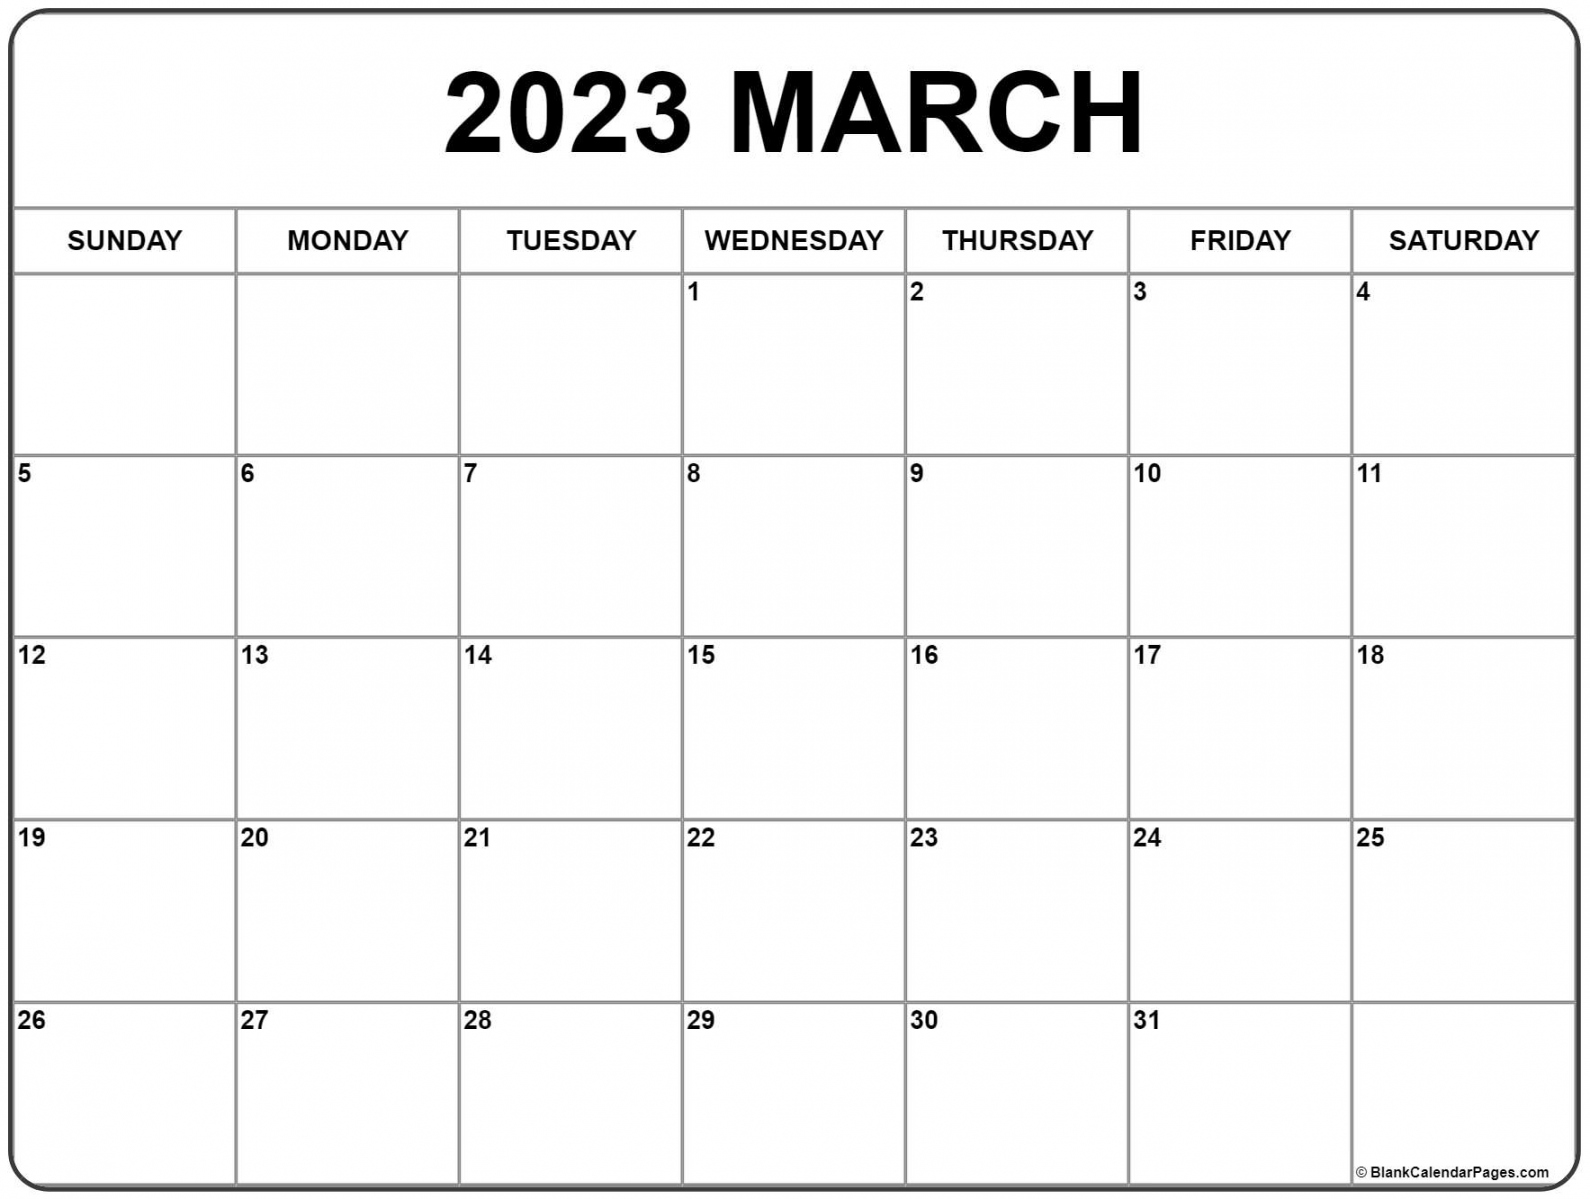 Free Printable March 2023 Calendar - Printable - March  calendar  free printable calendar